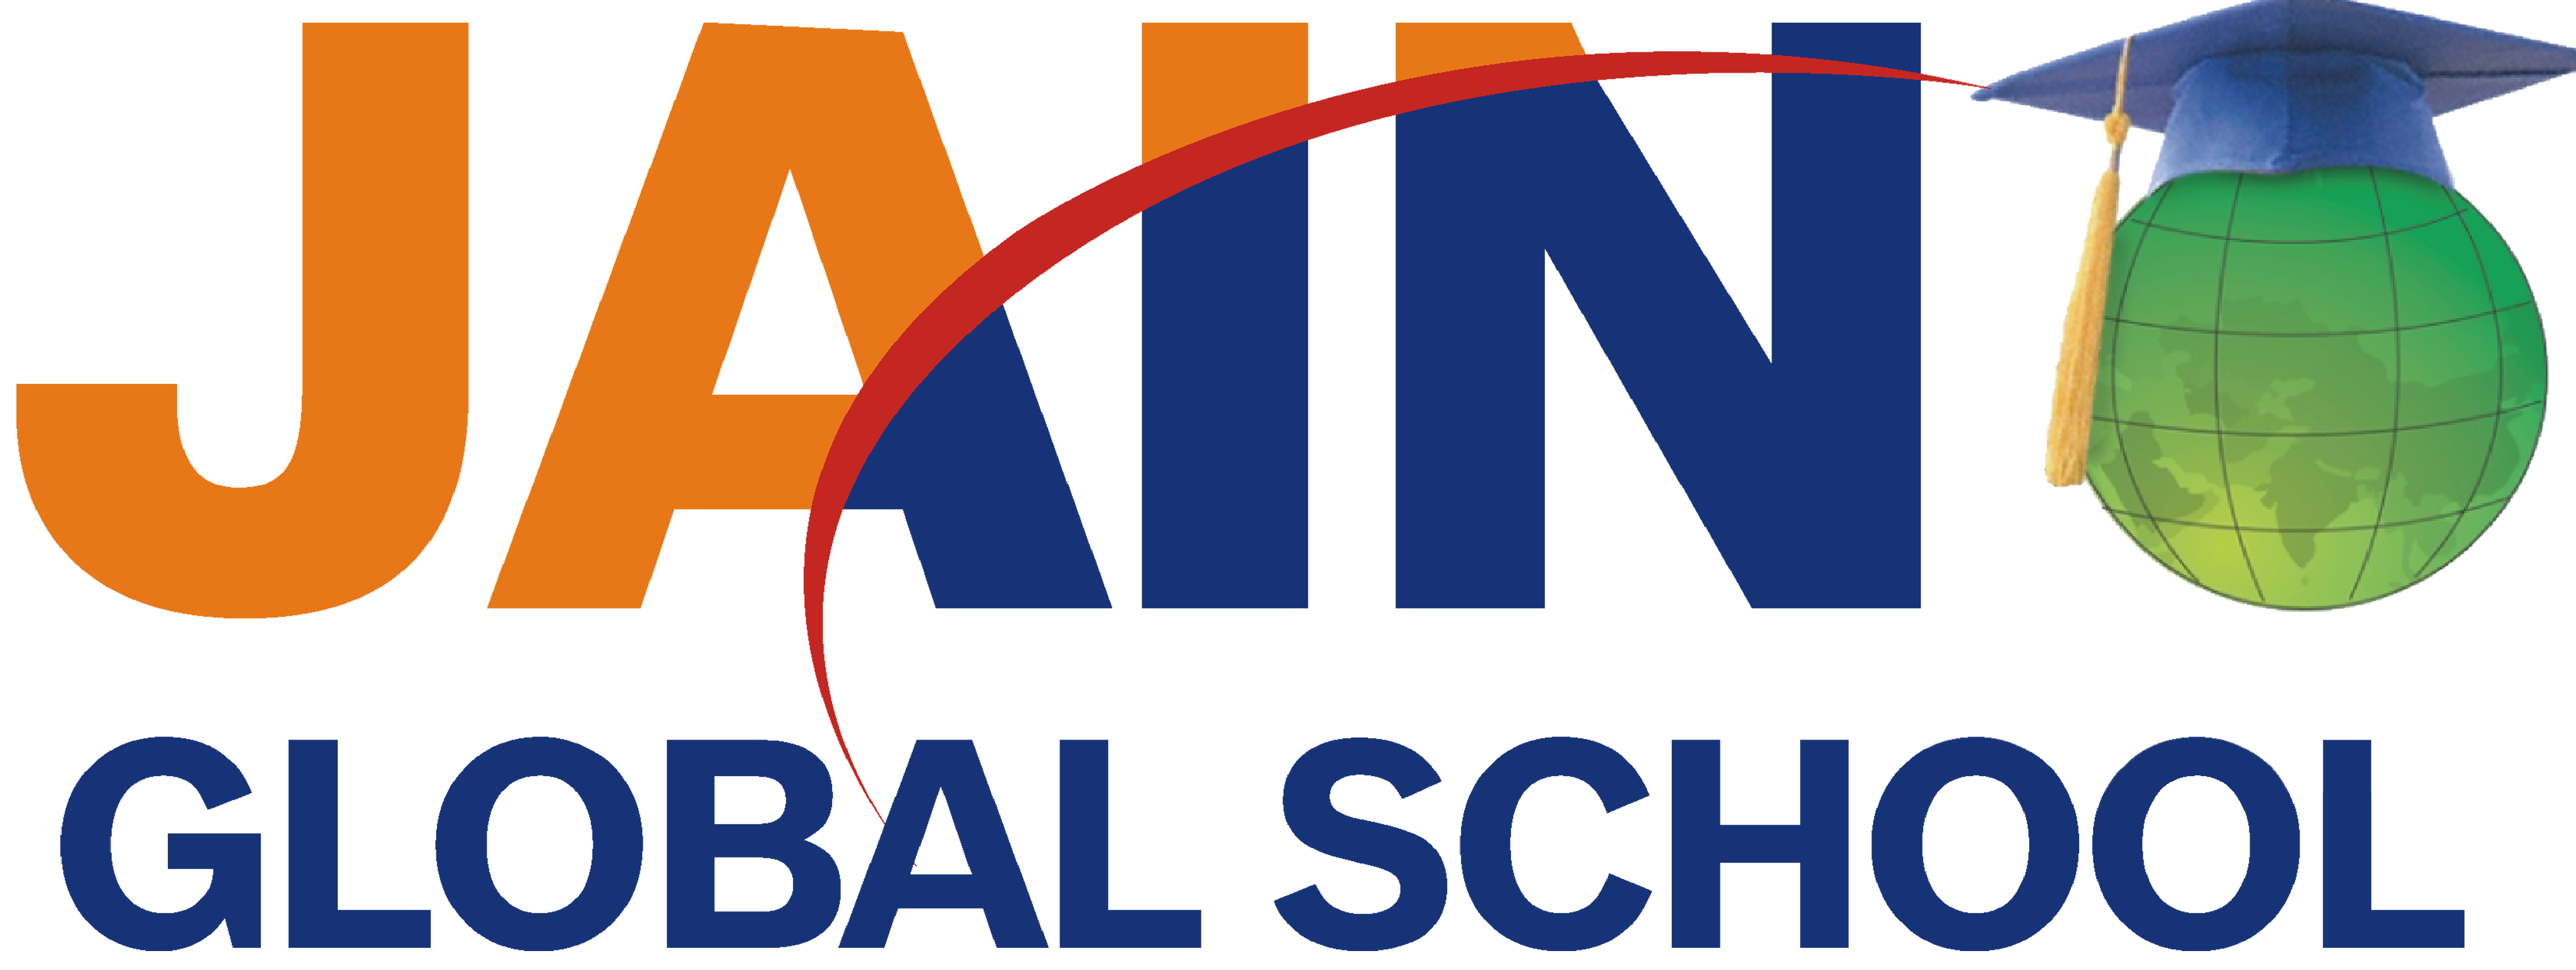 Jain Global School|Schools|Education